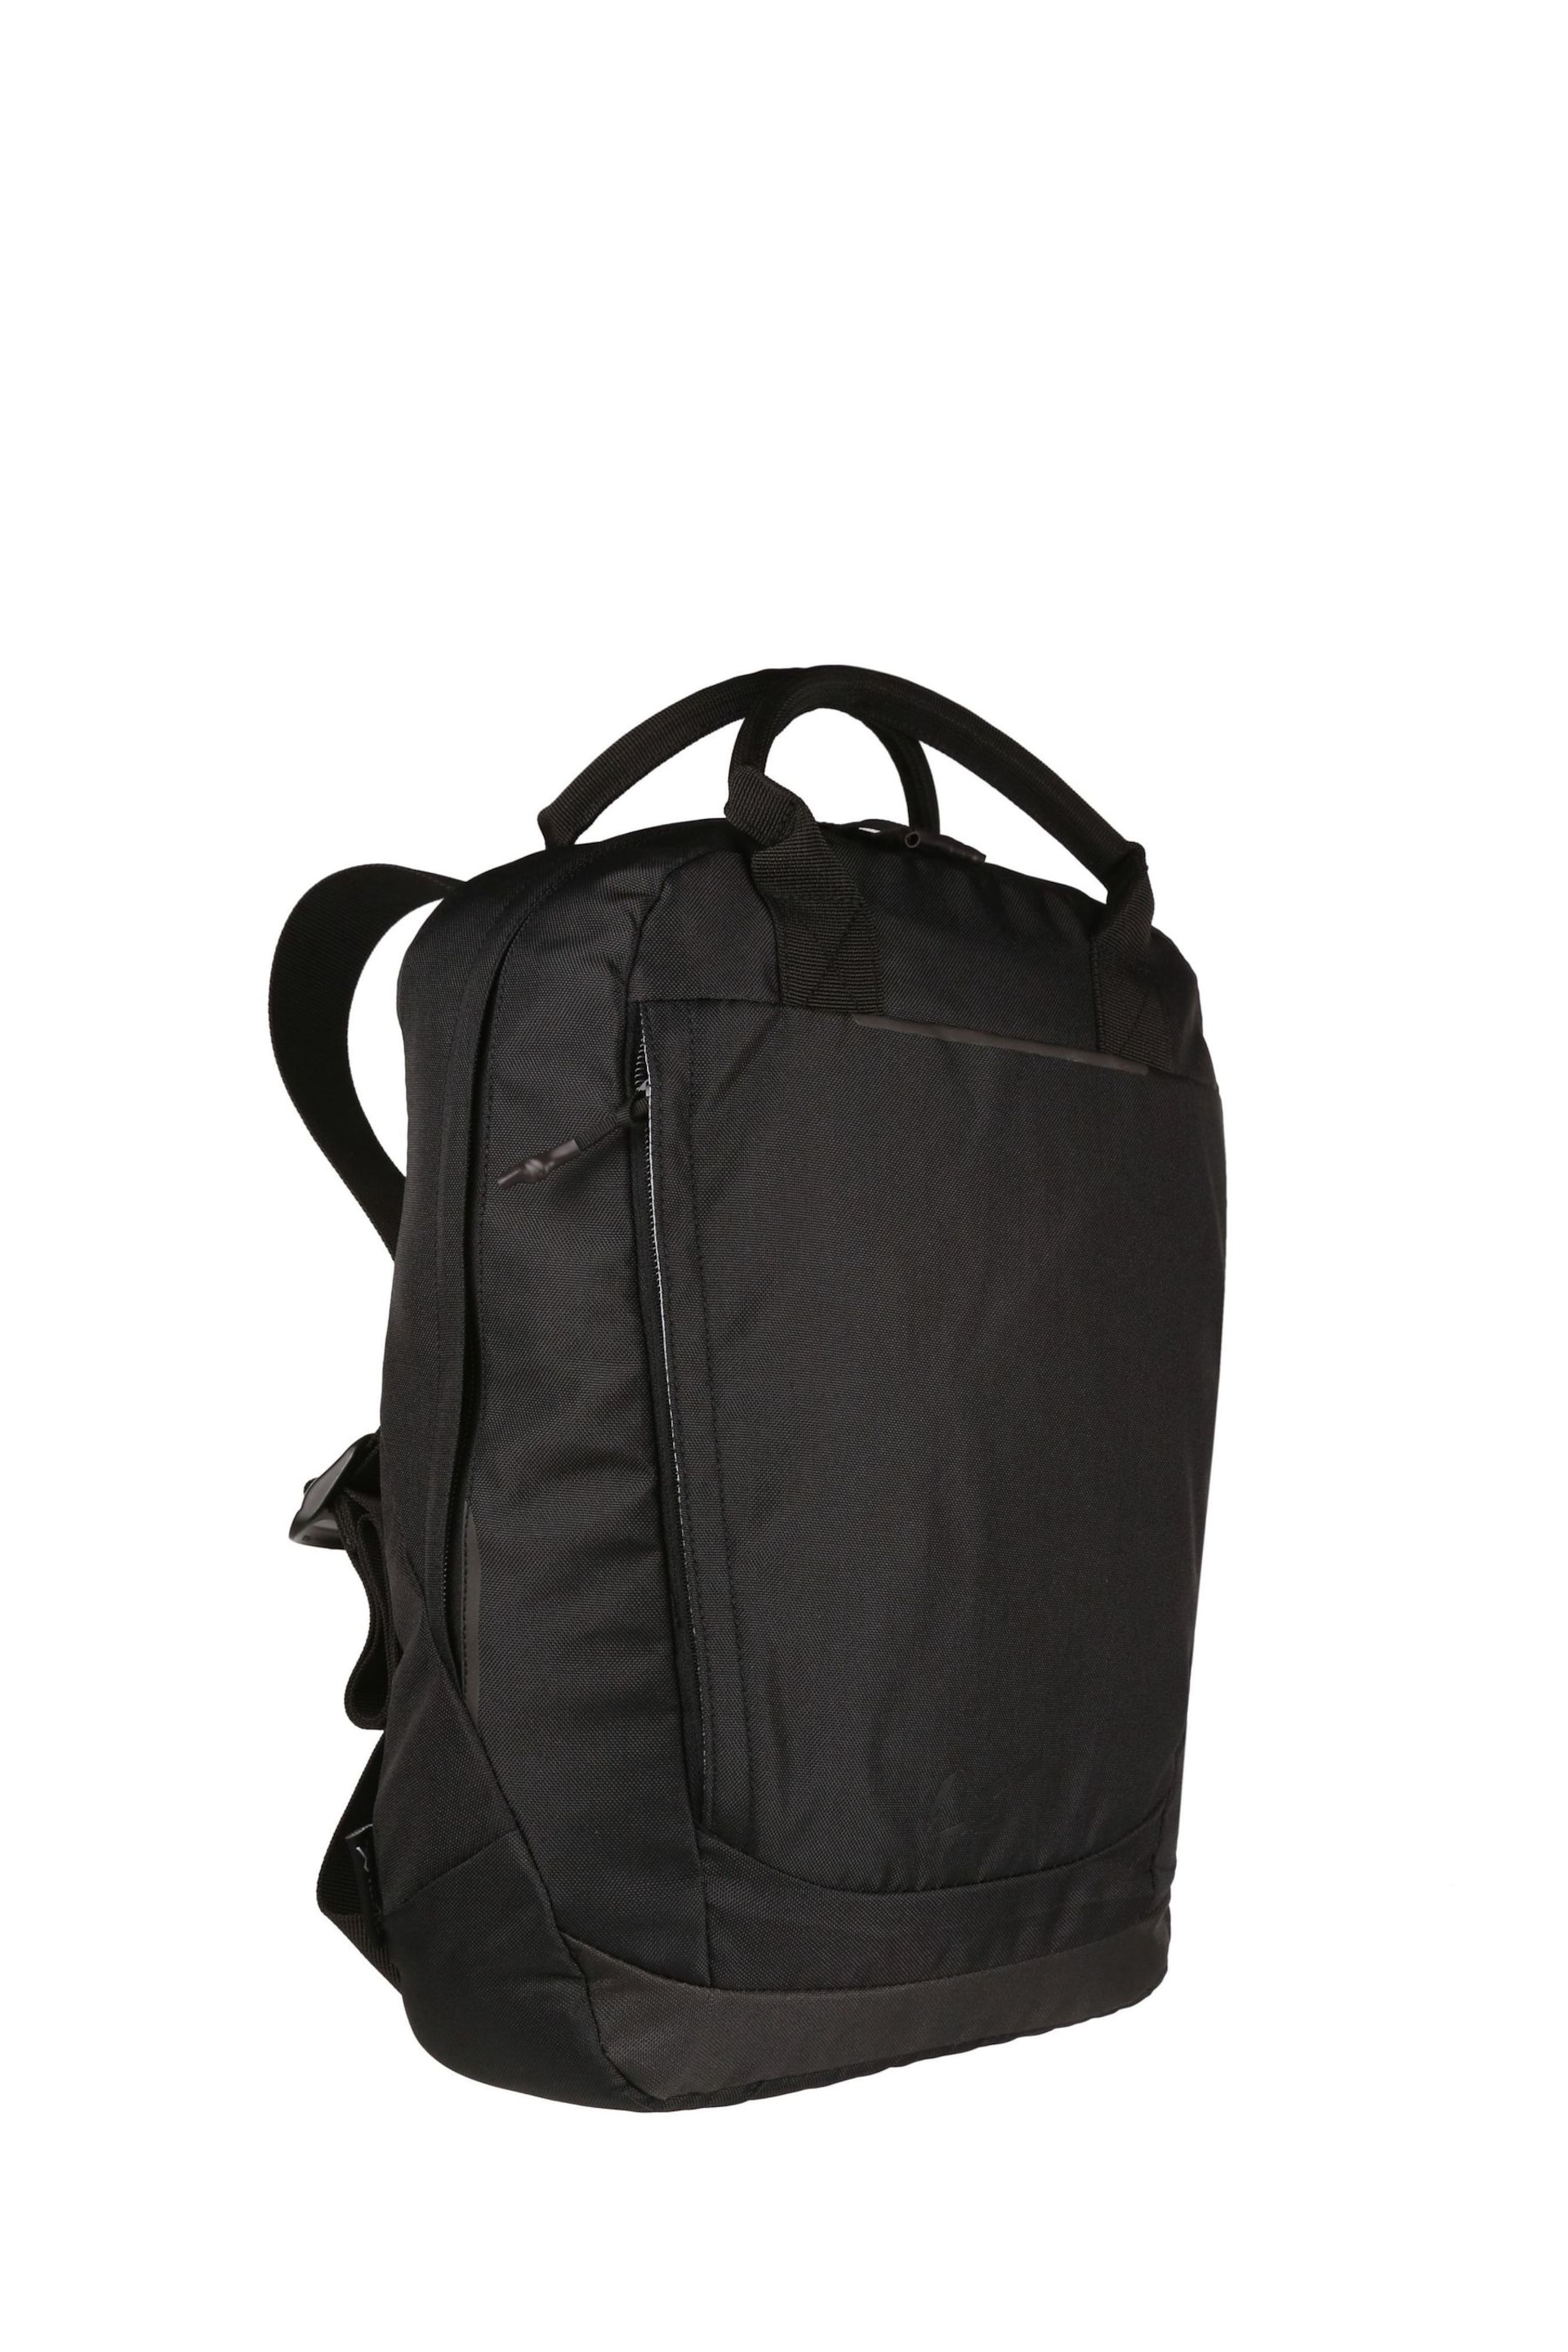 Regatta Black Shilton 12 Litre Backpack - Image 1 of 3